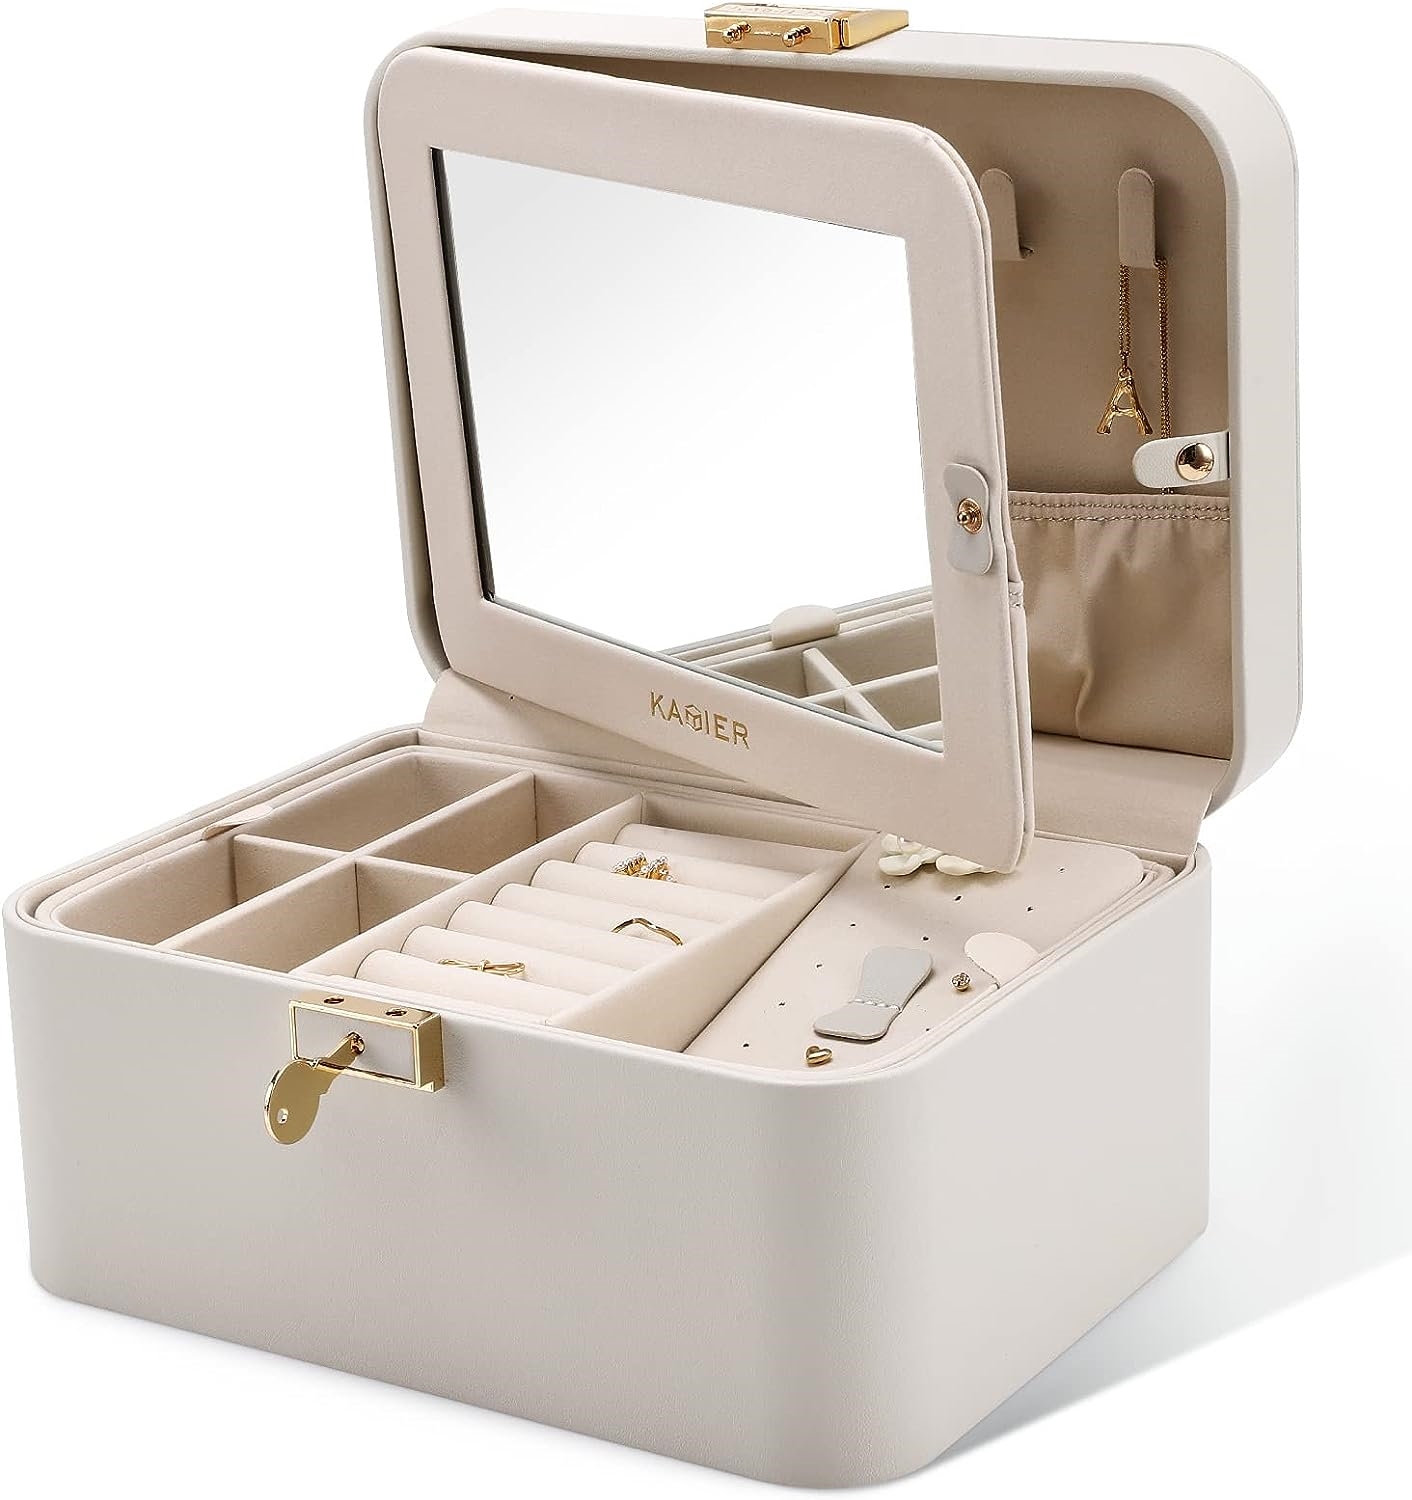 KAMIER Jewelry Safe Box | DeviceDaily.com